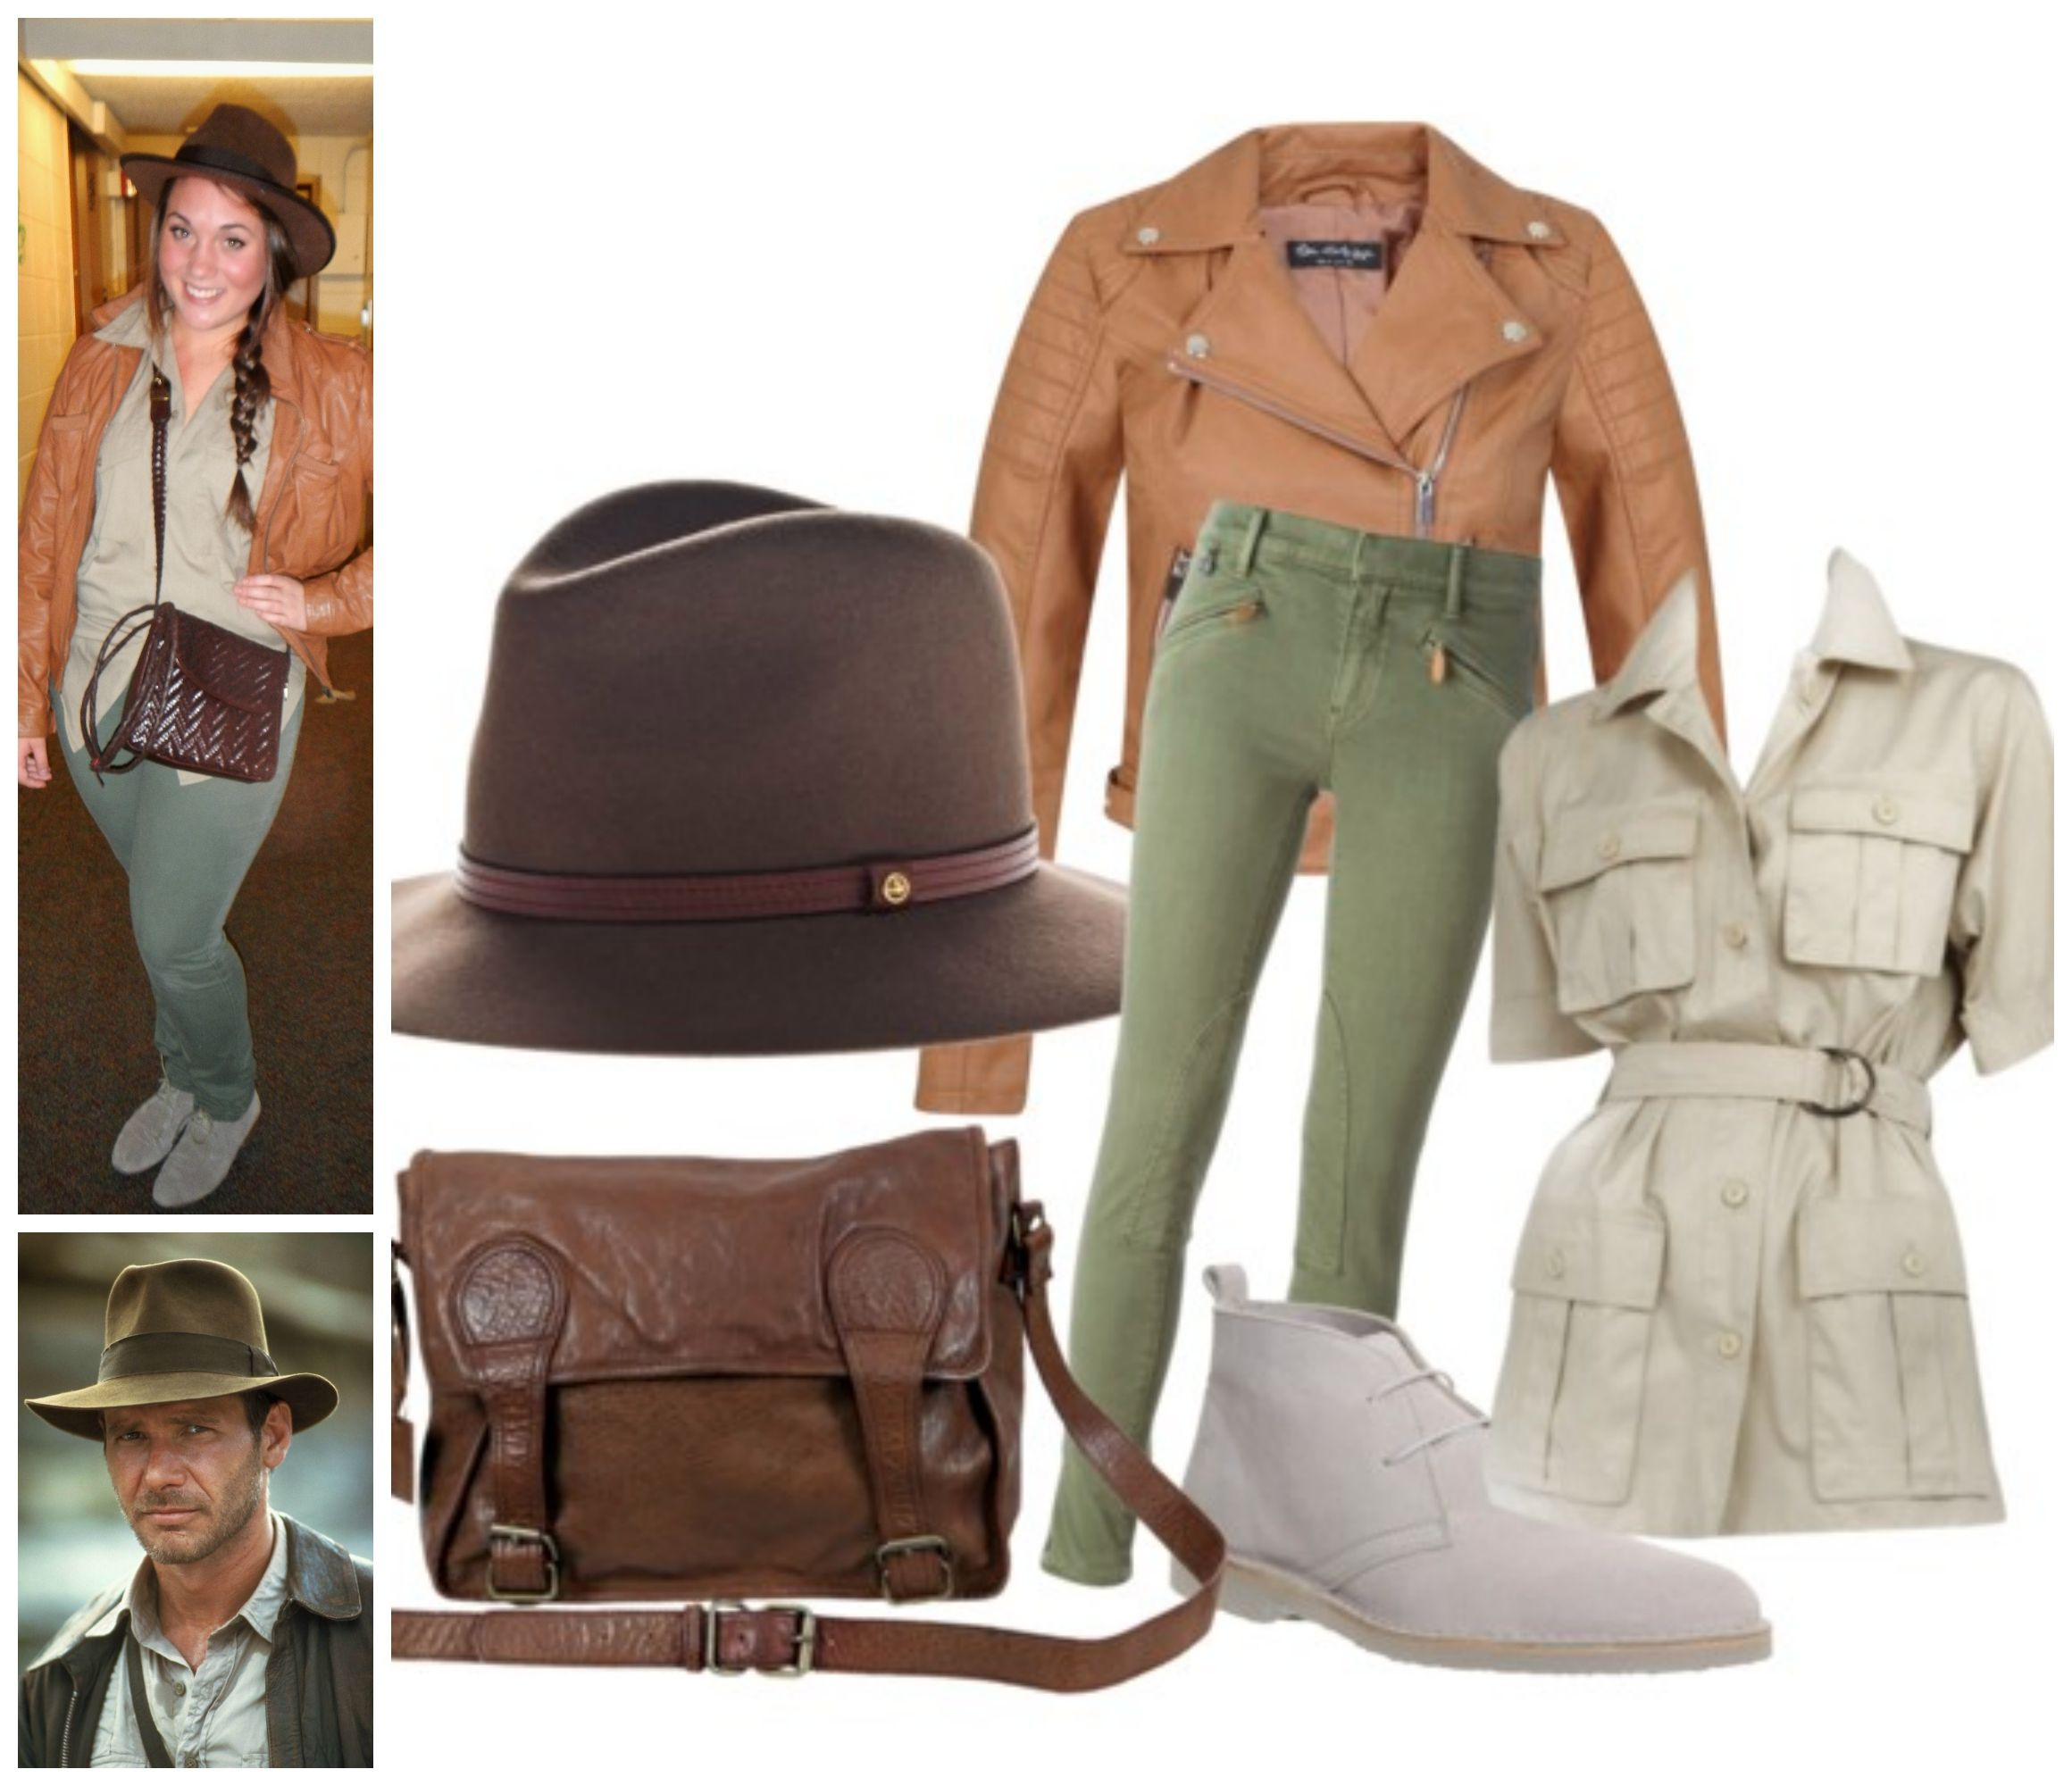 Best ideas about Indiana Jones Costume DIY
. Save or Pin Indiana Jones Halloween costume Female version Easy DIY Now.